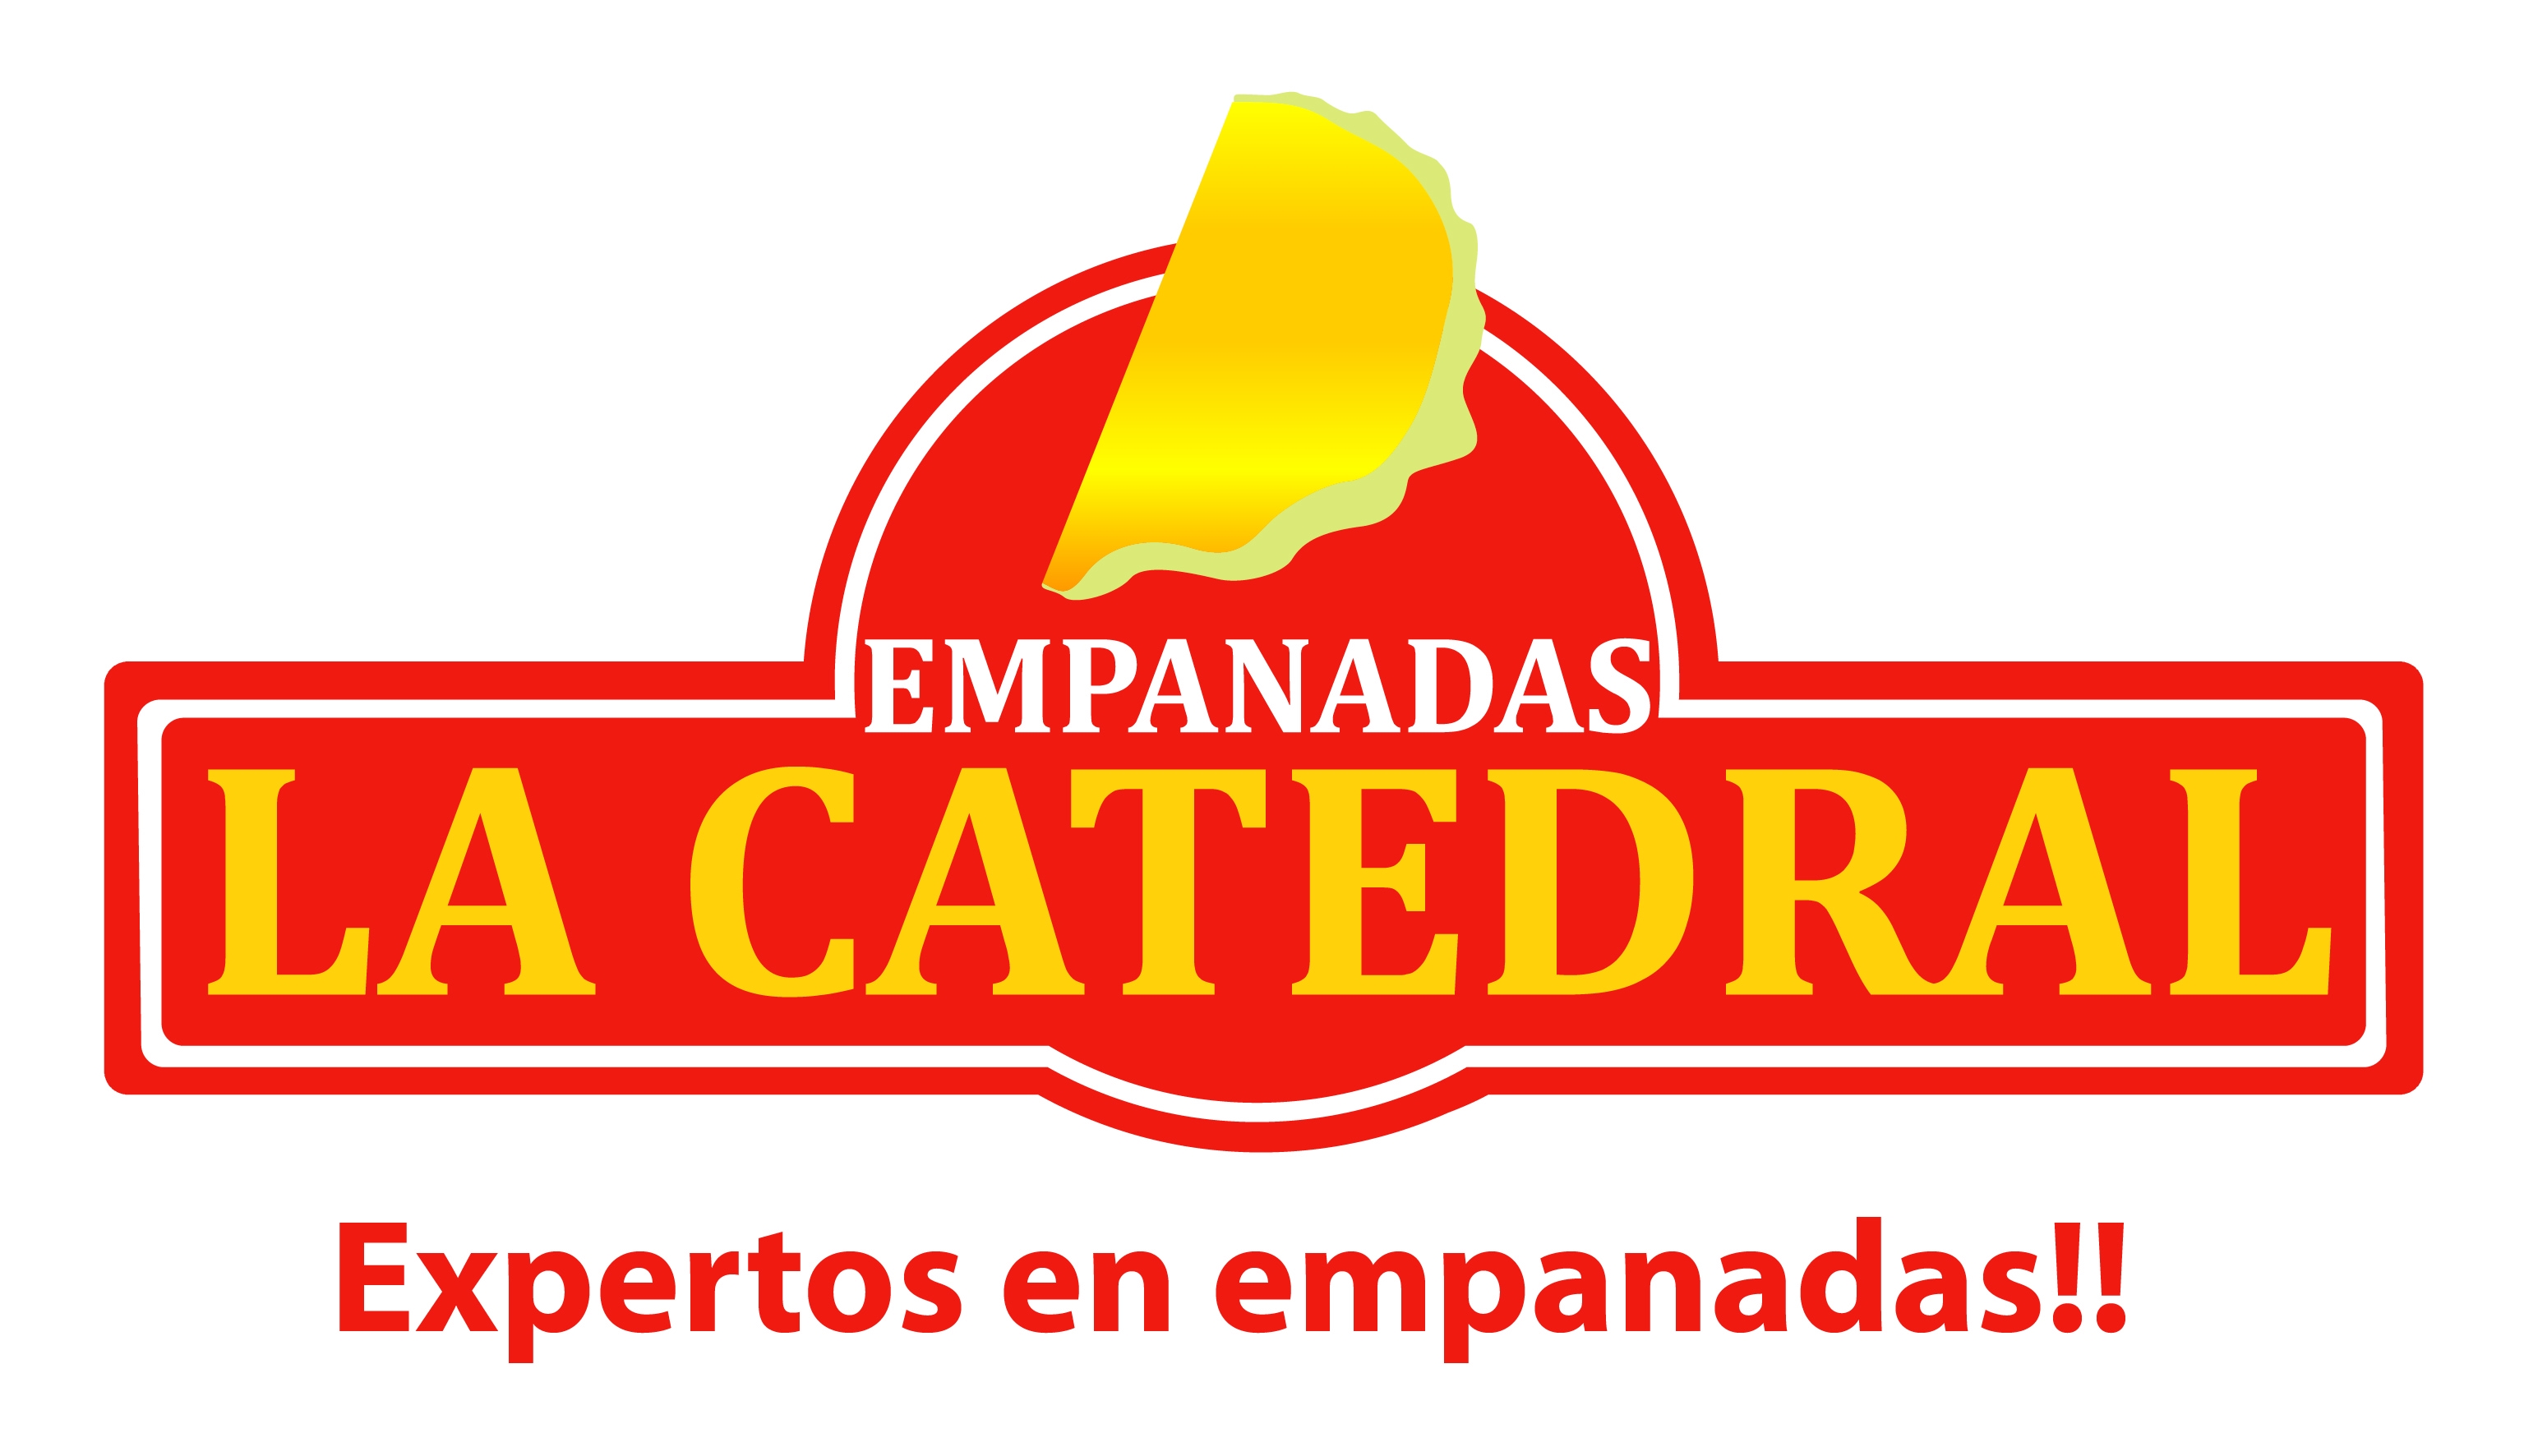 EMPANADAS LA CATEDRAL